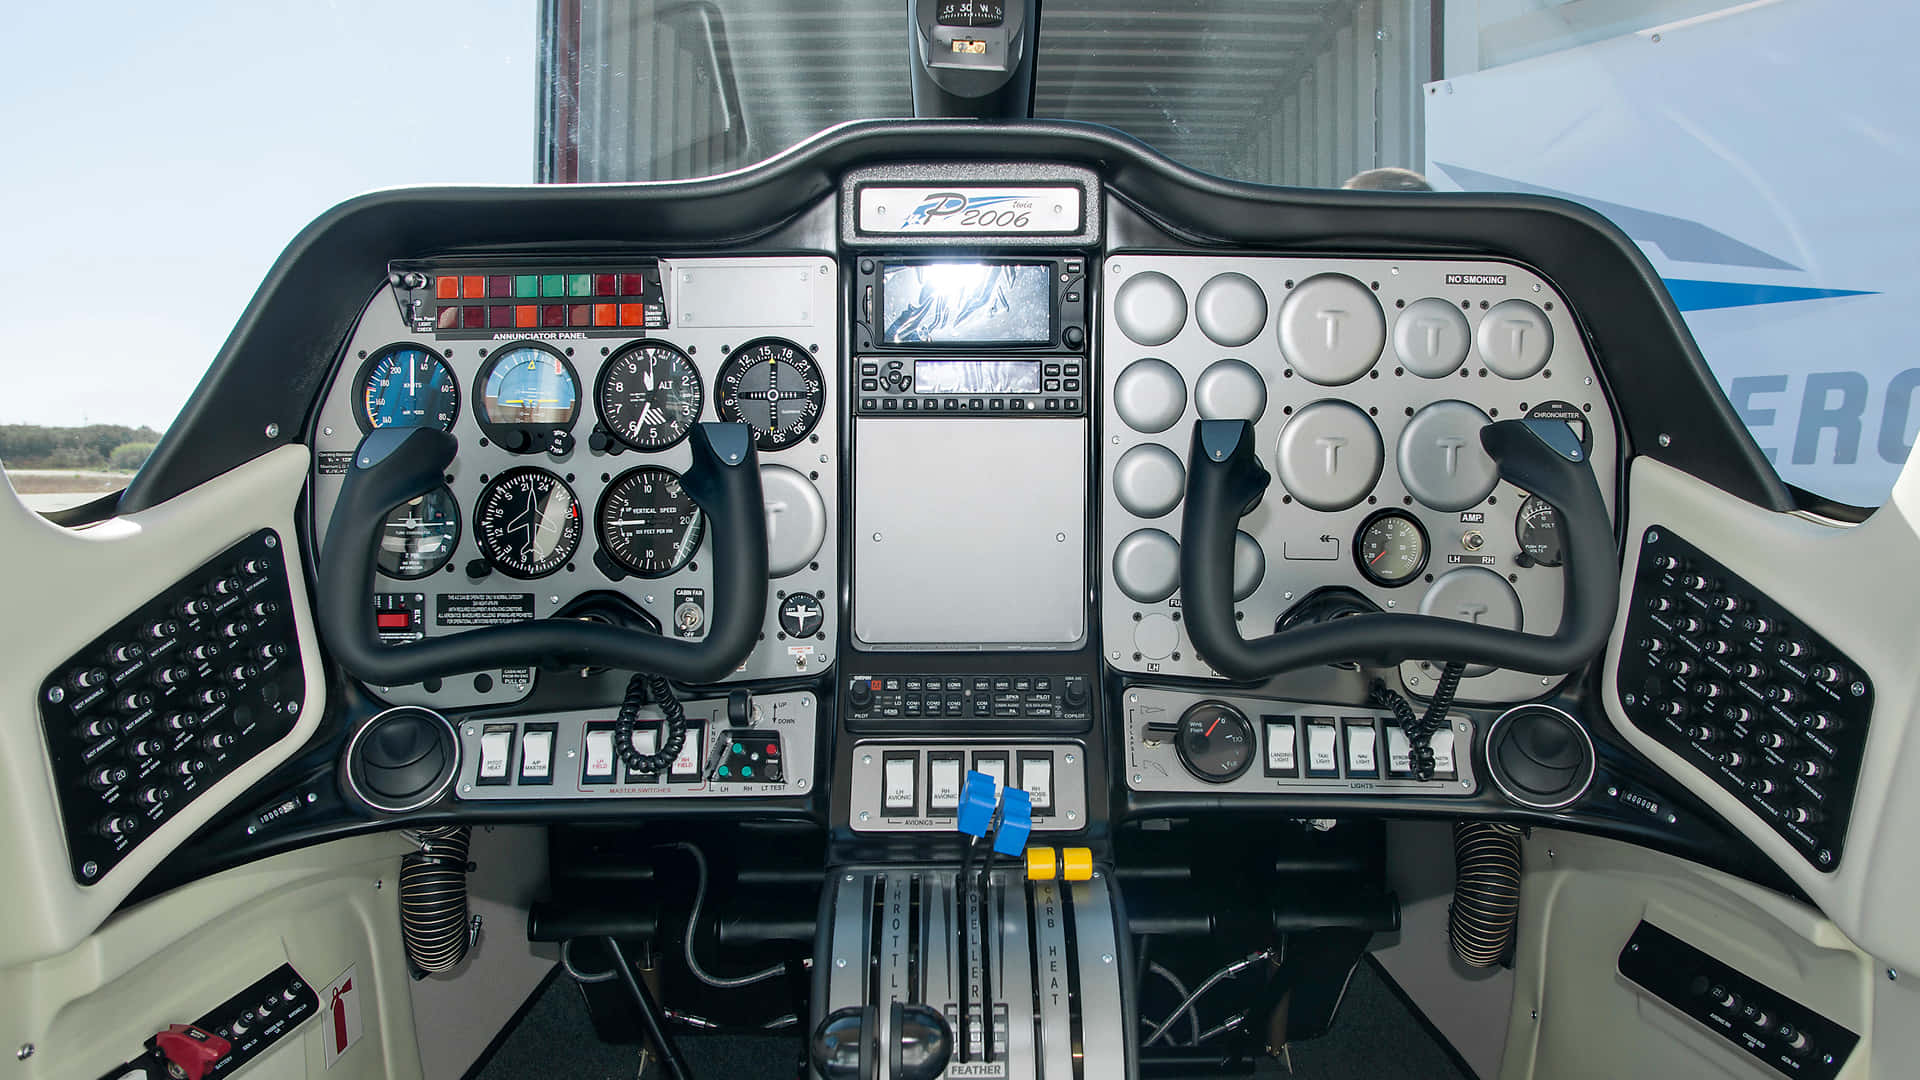 Cockpitetpå En Helikopter Med En Stor Skärm